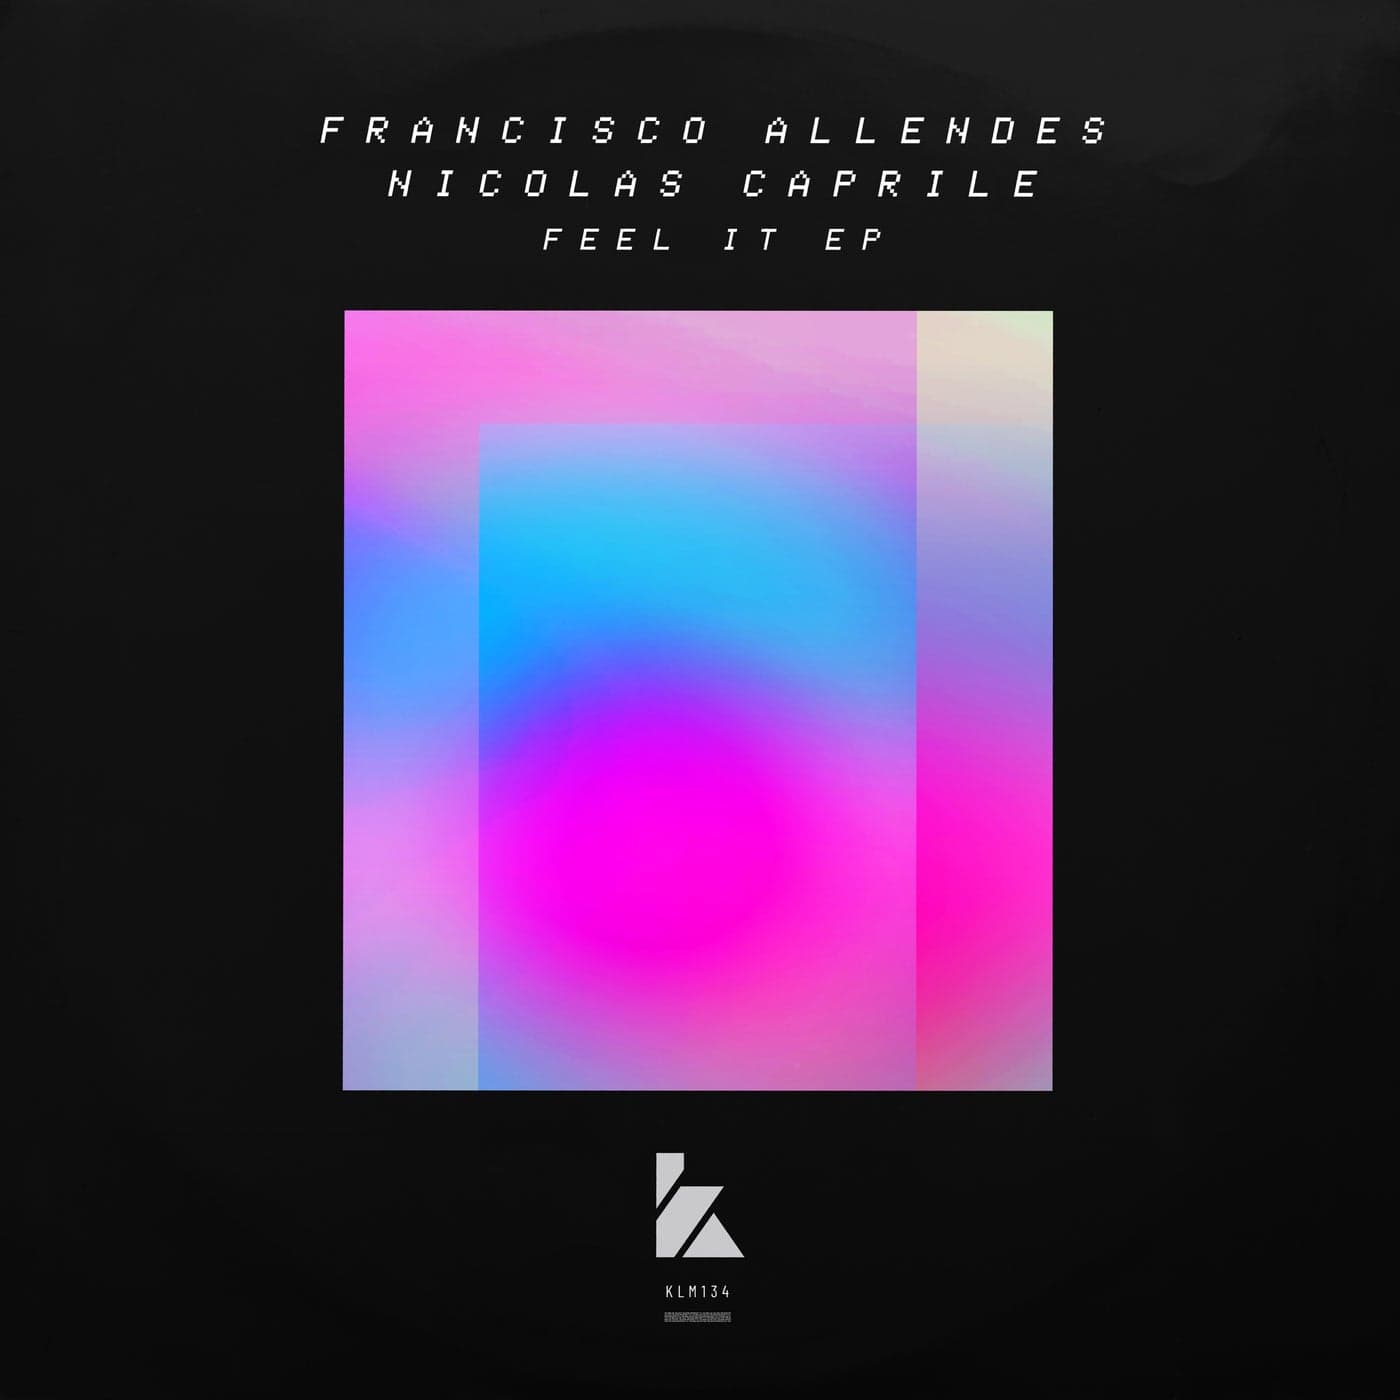 image cover: Francisco Allendes, Nicolas Caprile - Feel It EP / KLM13401Z